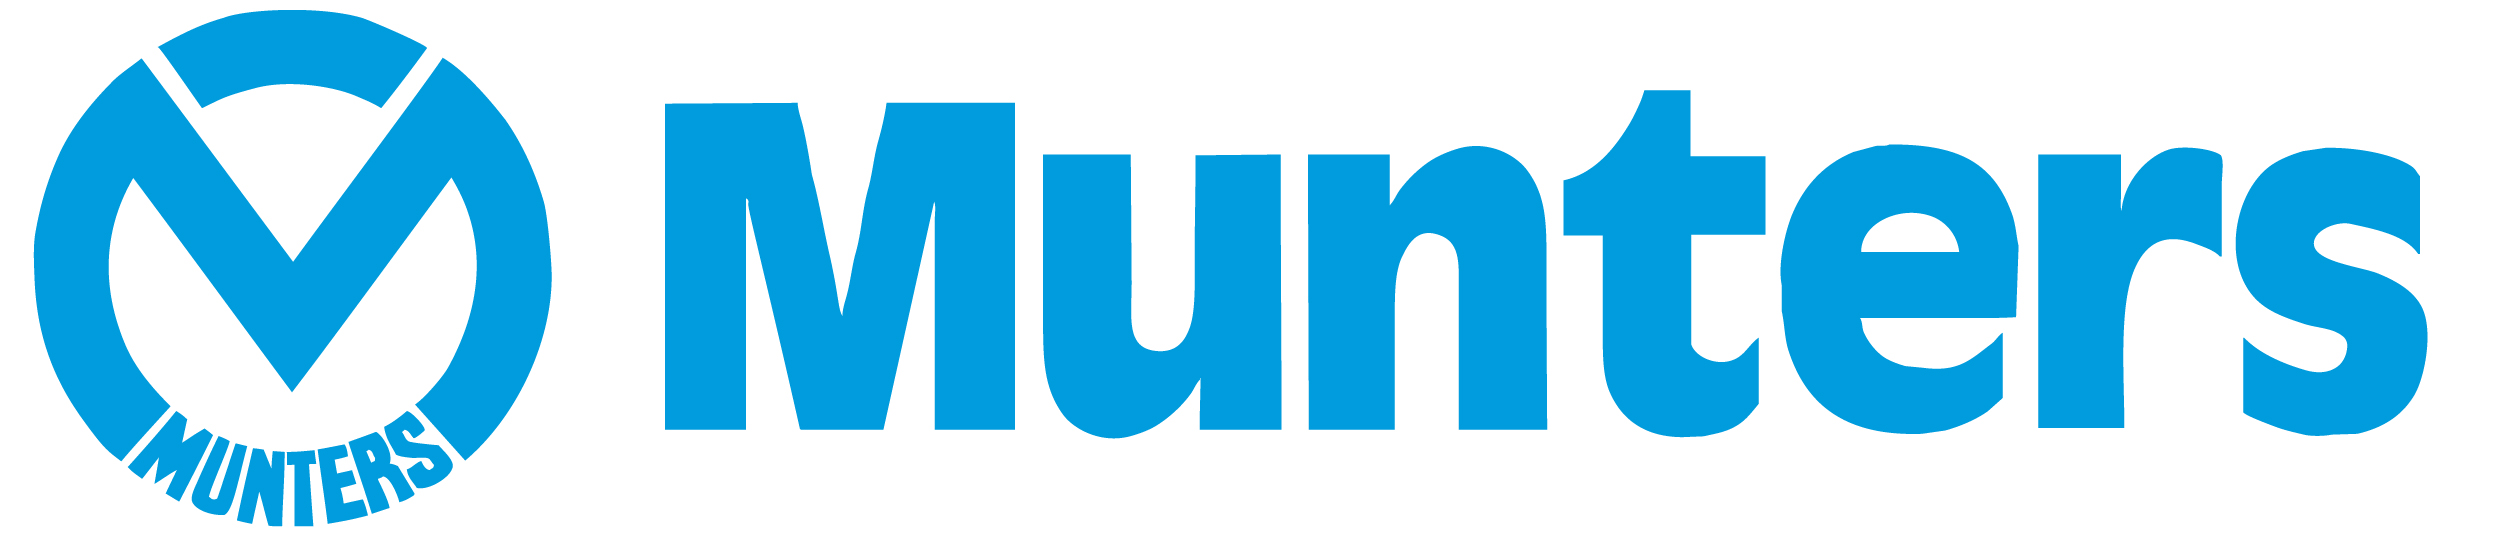 Munters Logo 2013